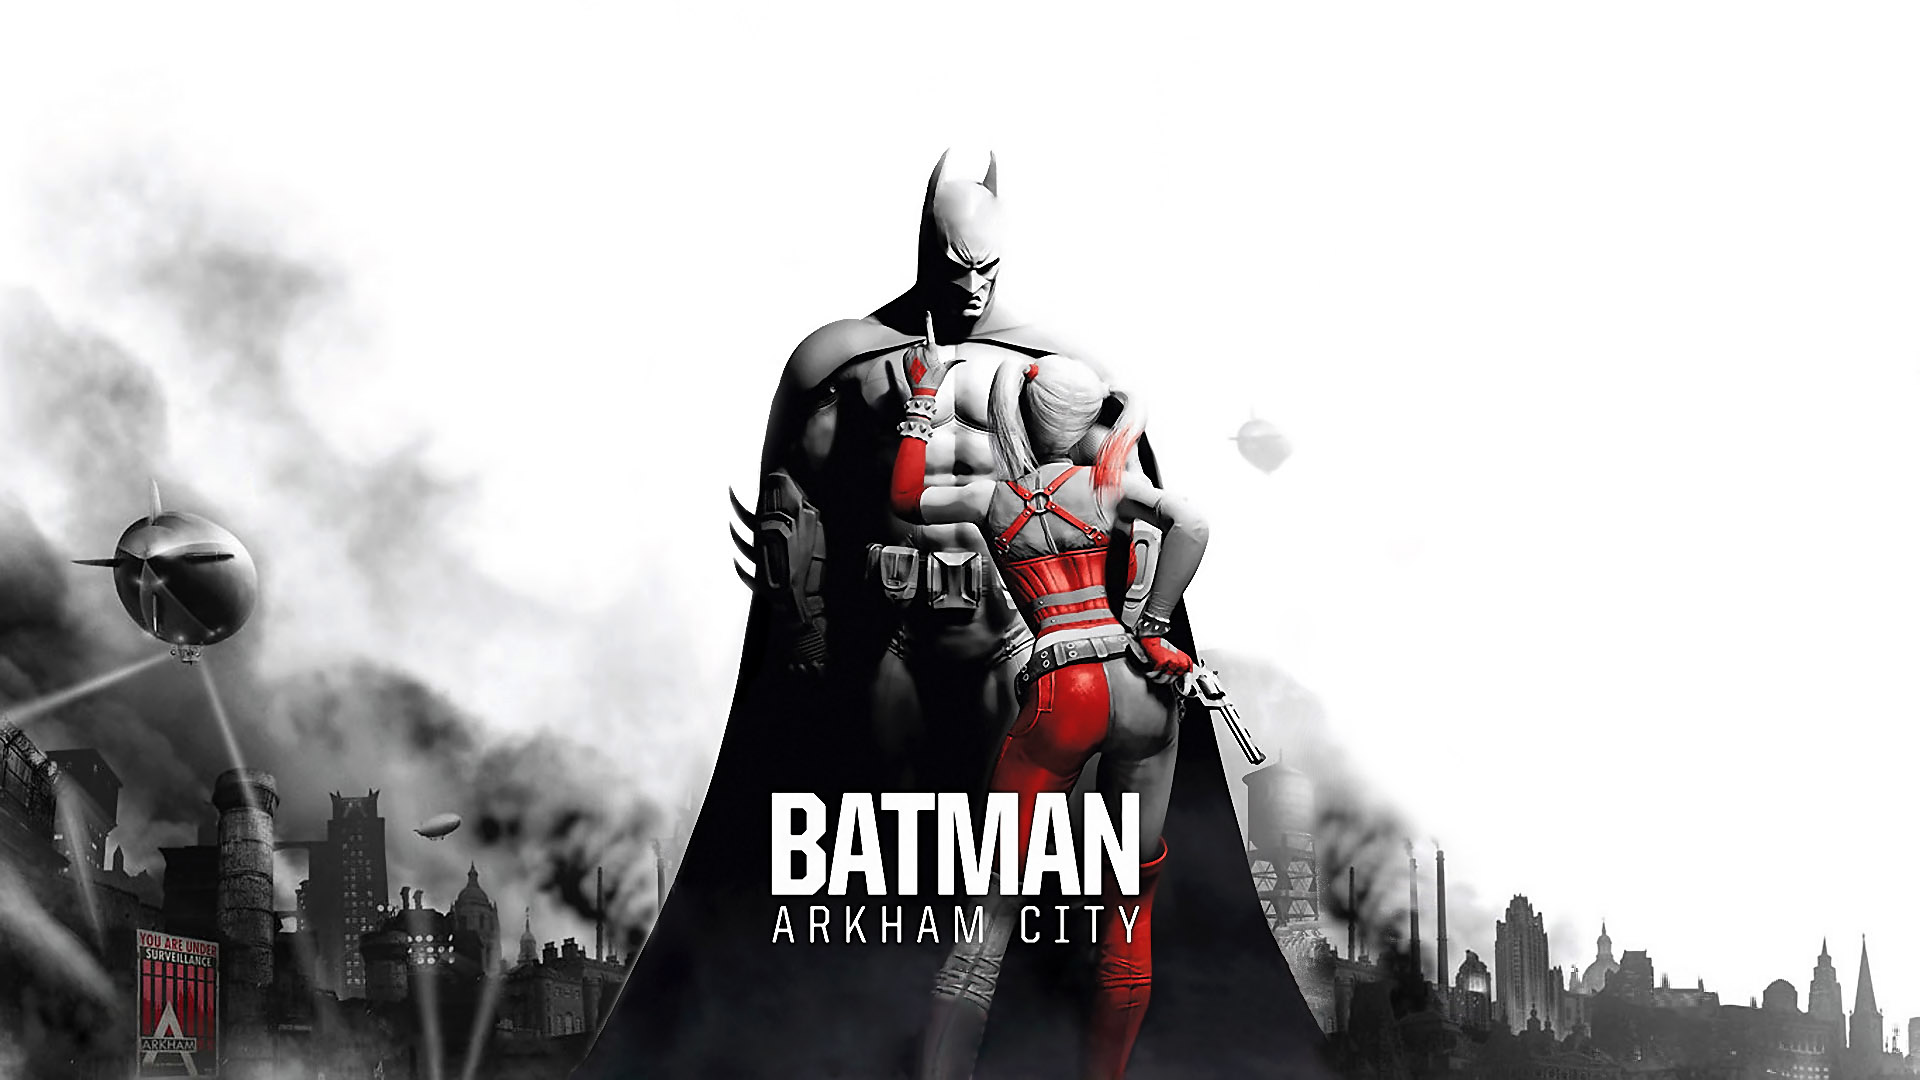 Pre-Order Batman: Arkham City Get $30 Coupon Plus $10 Off Upcoming LOTR Game